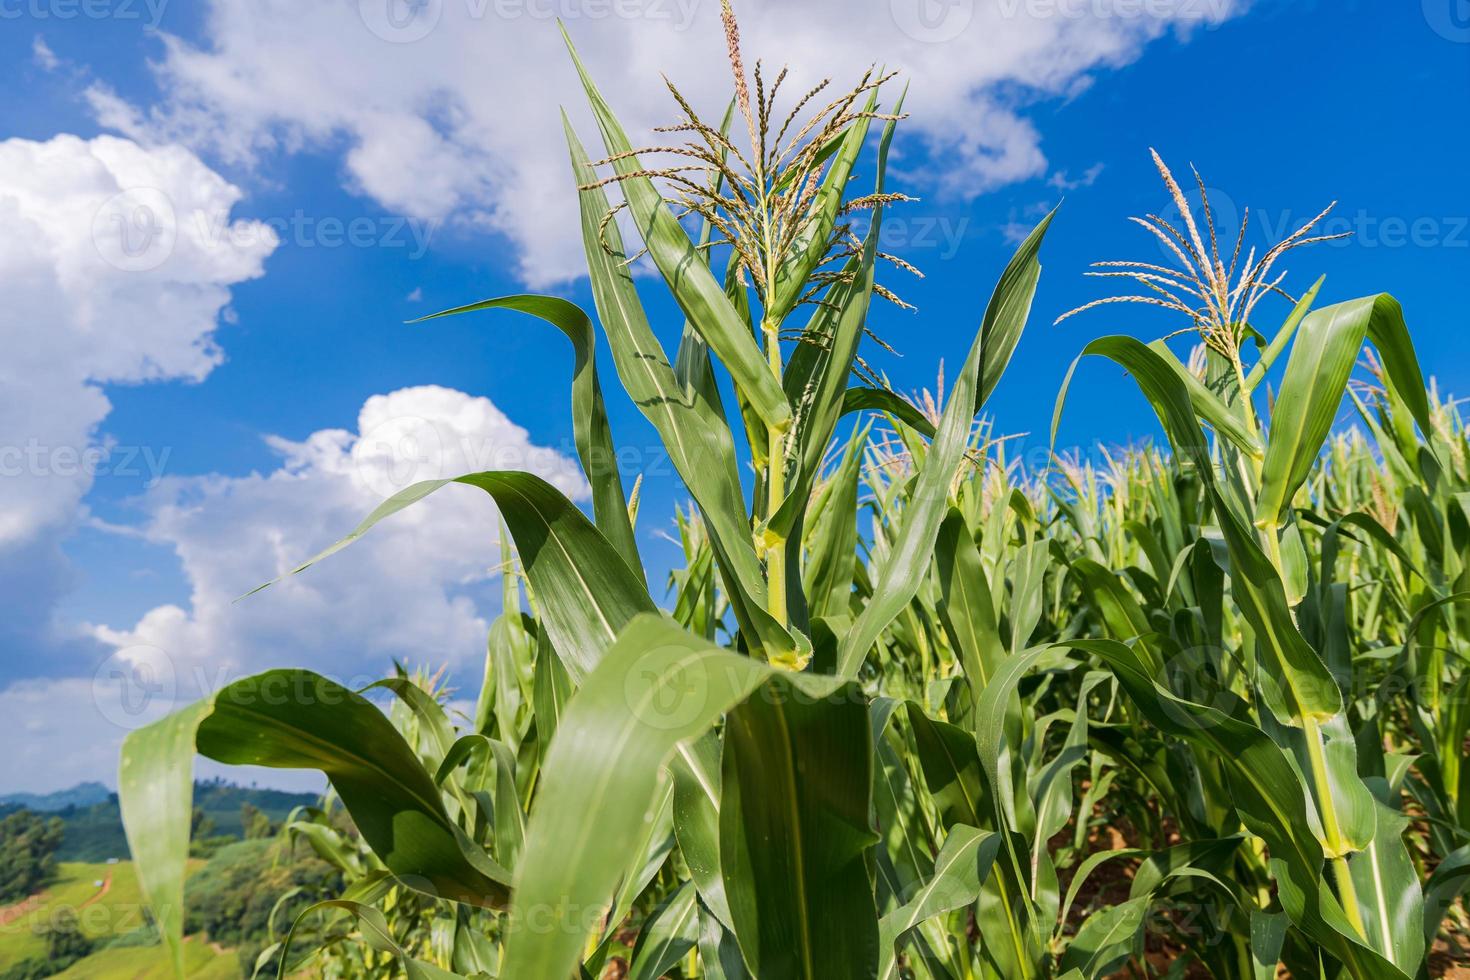 Corn fields under the blue sky photo